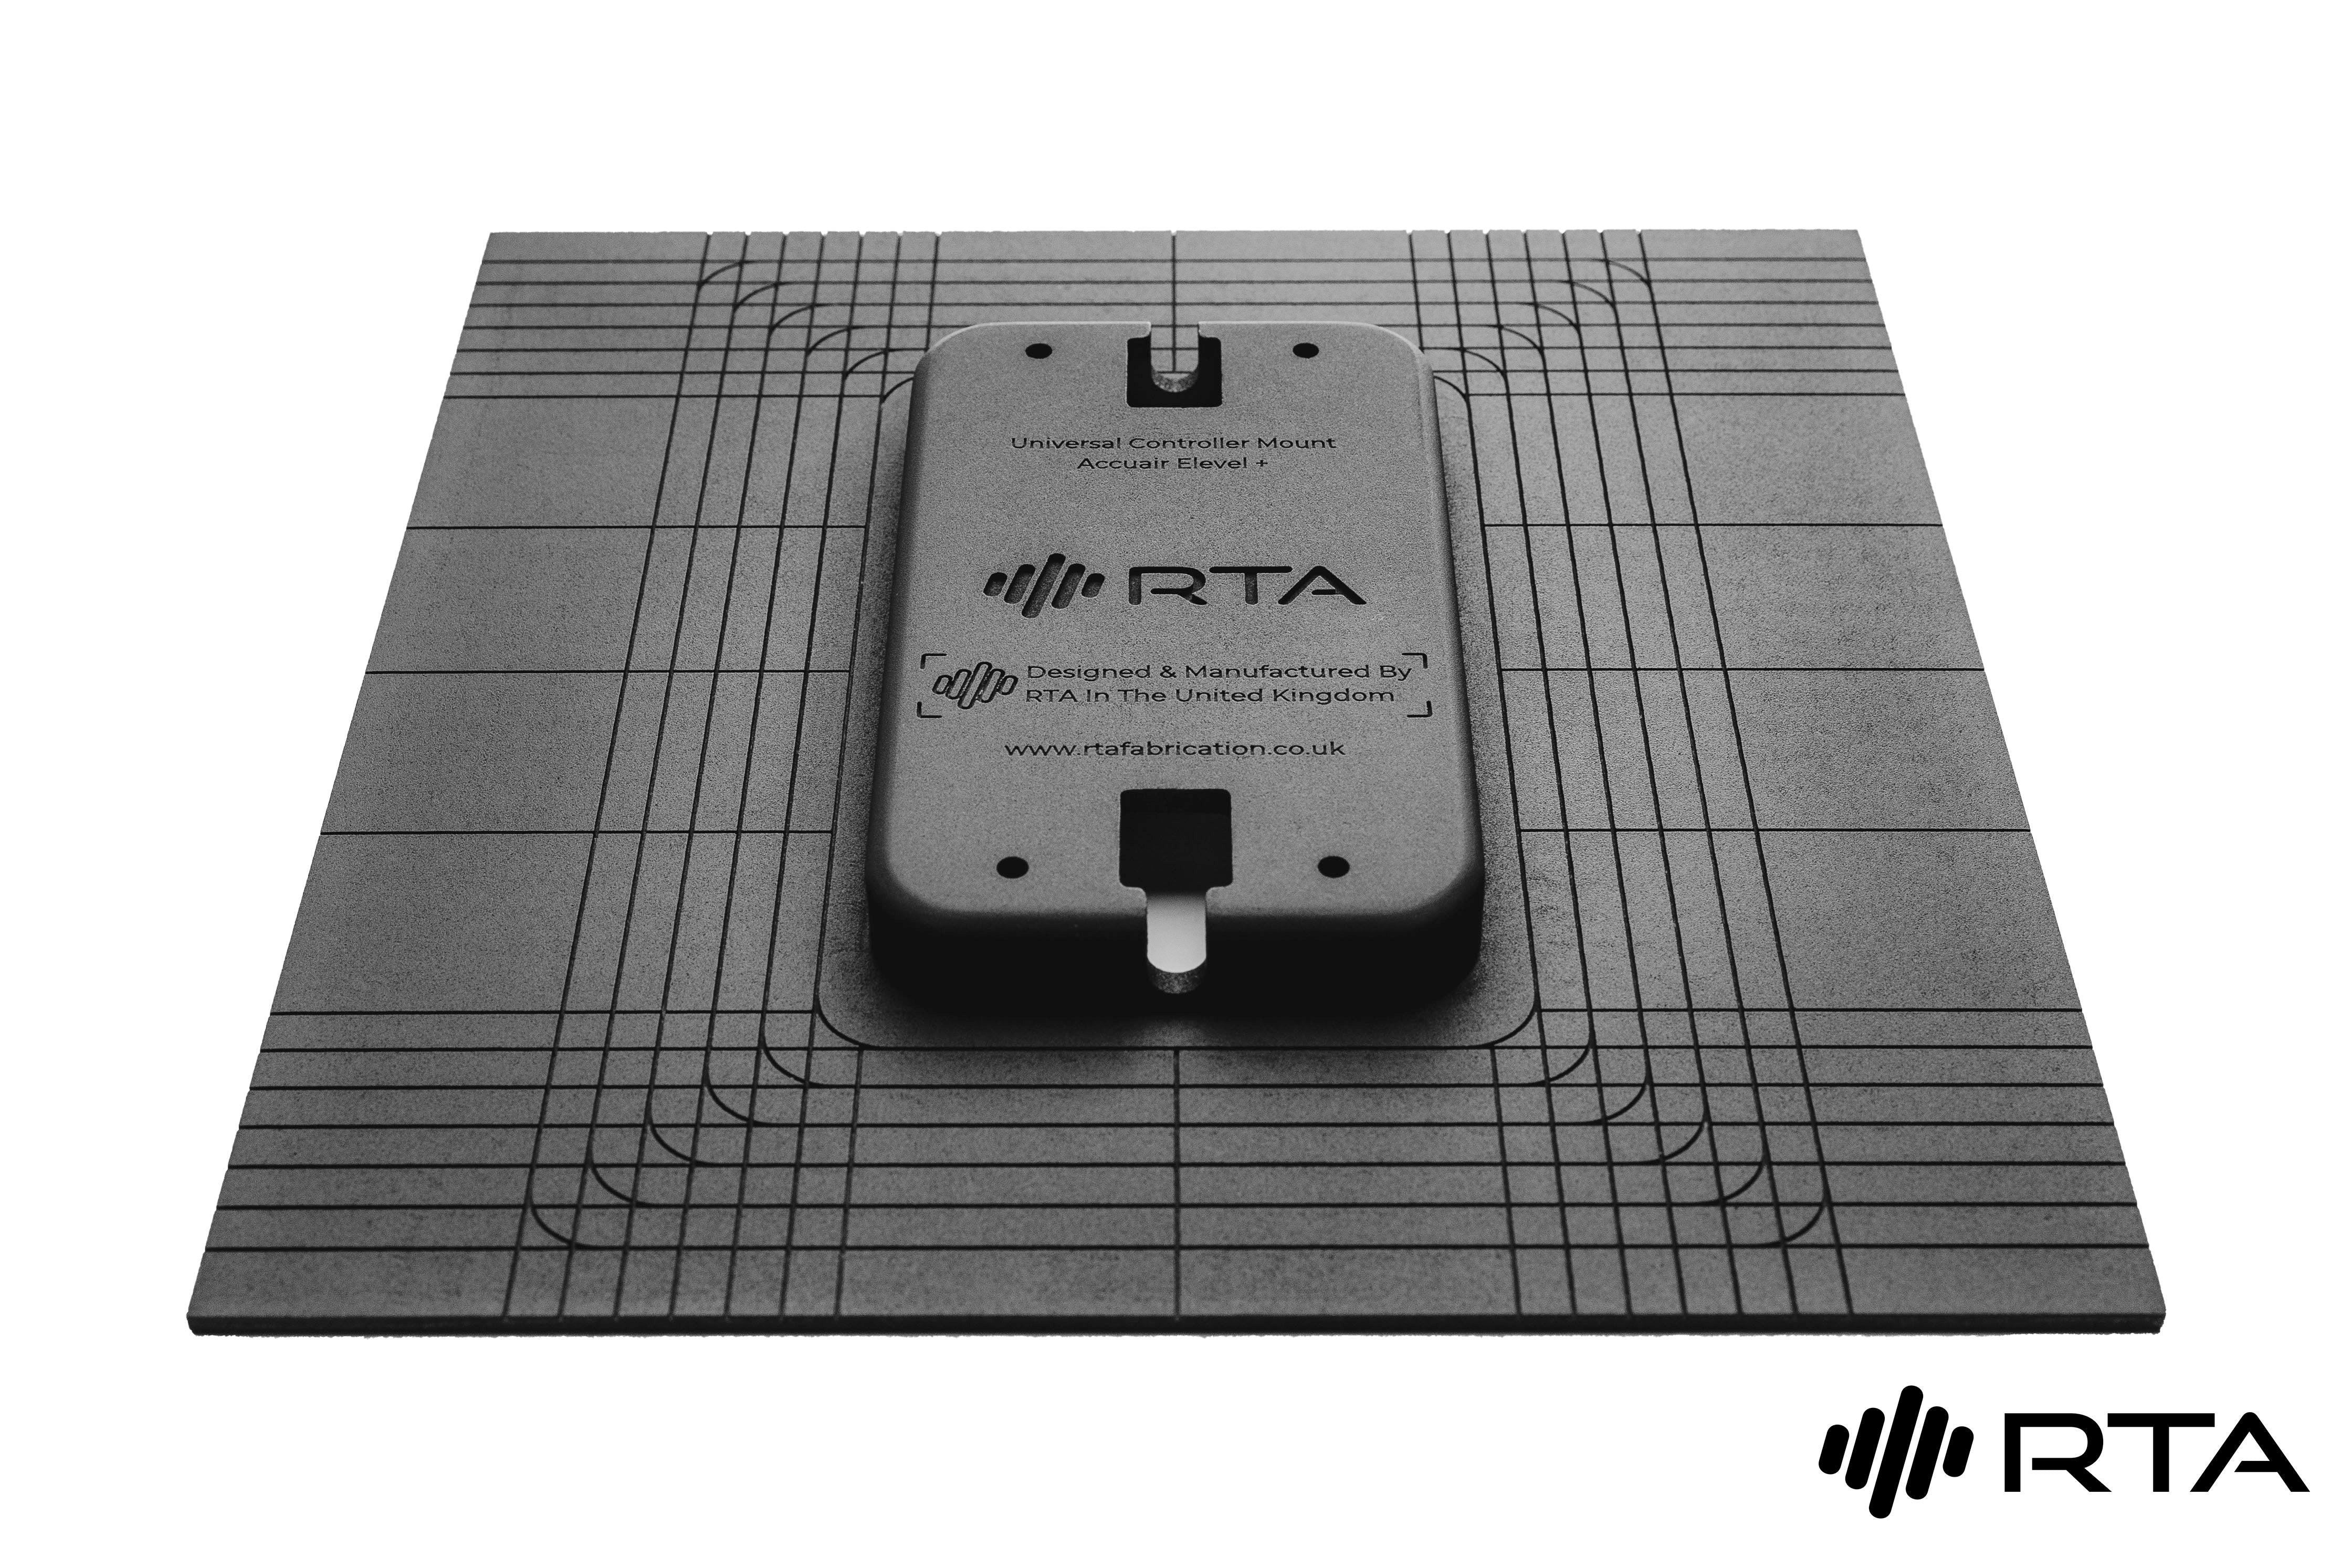 RTA Accuair Elevel Plus Universal Controller Mount